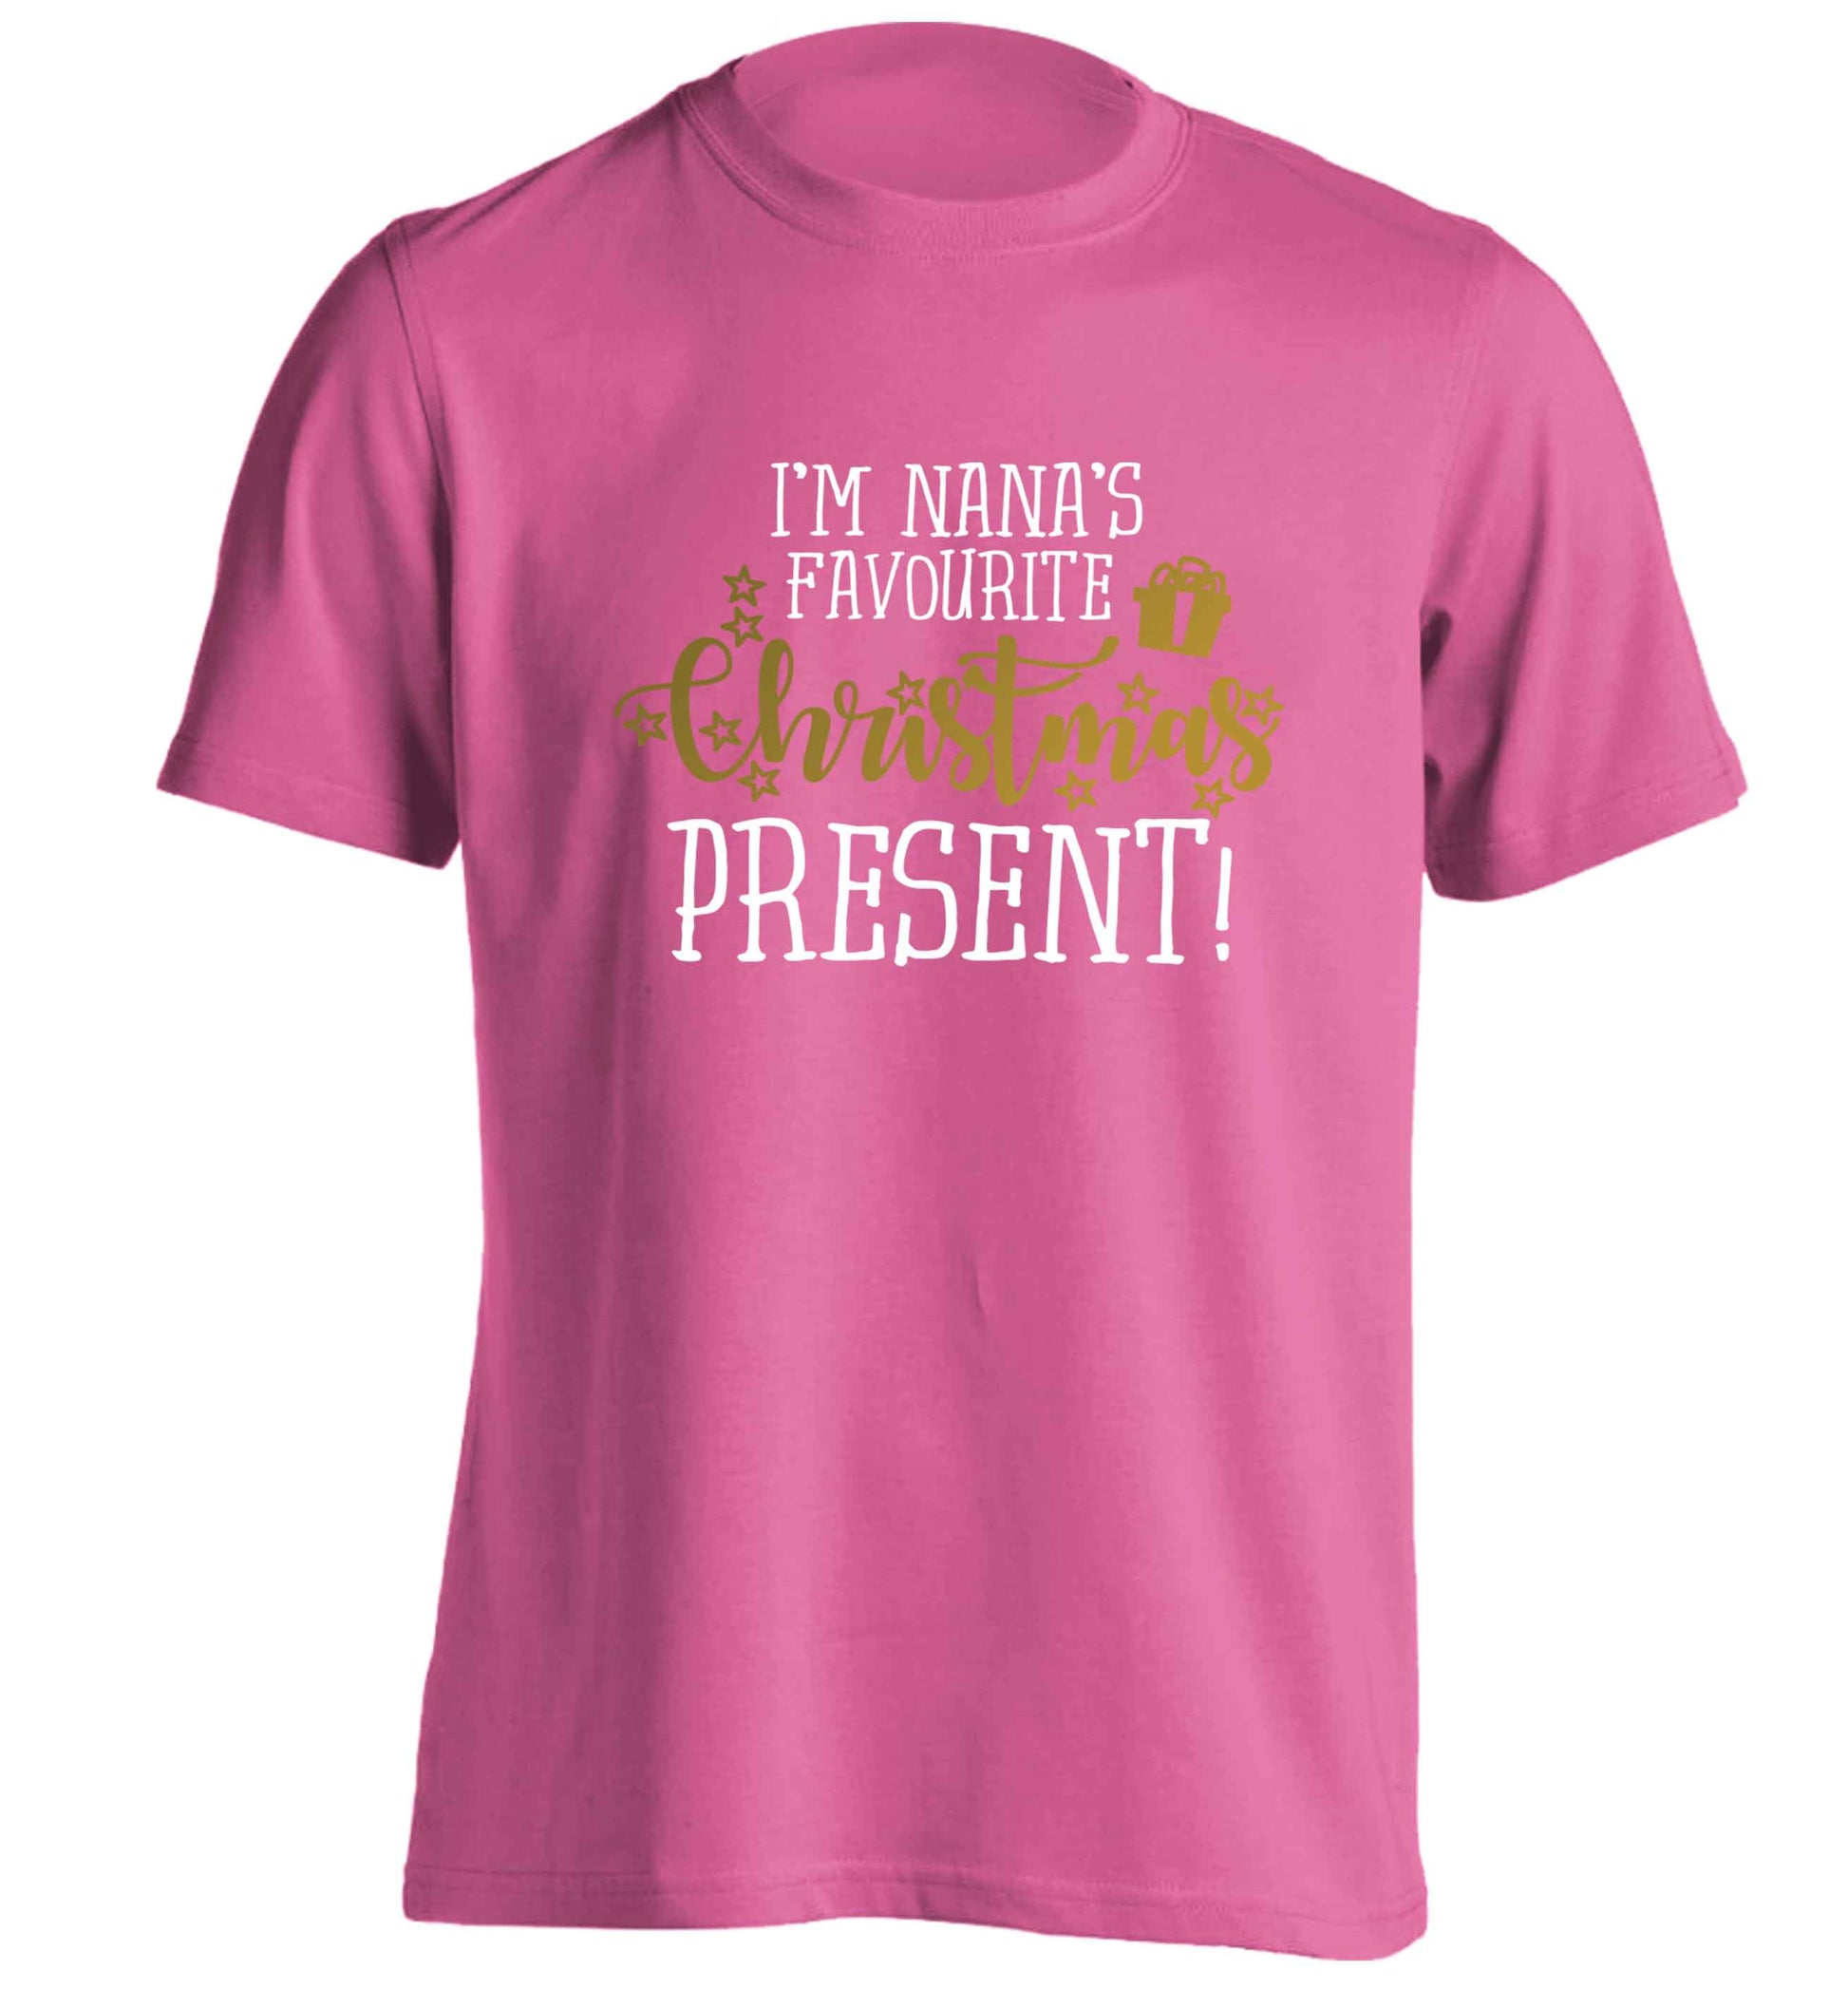 Nana's favourite Christmas present adults unisex pink Tshirt 2XL